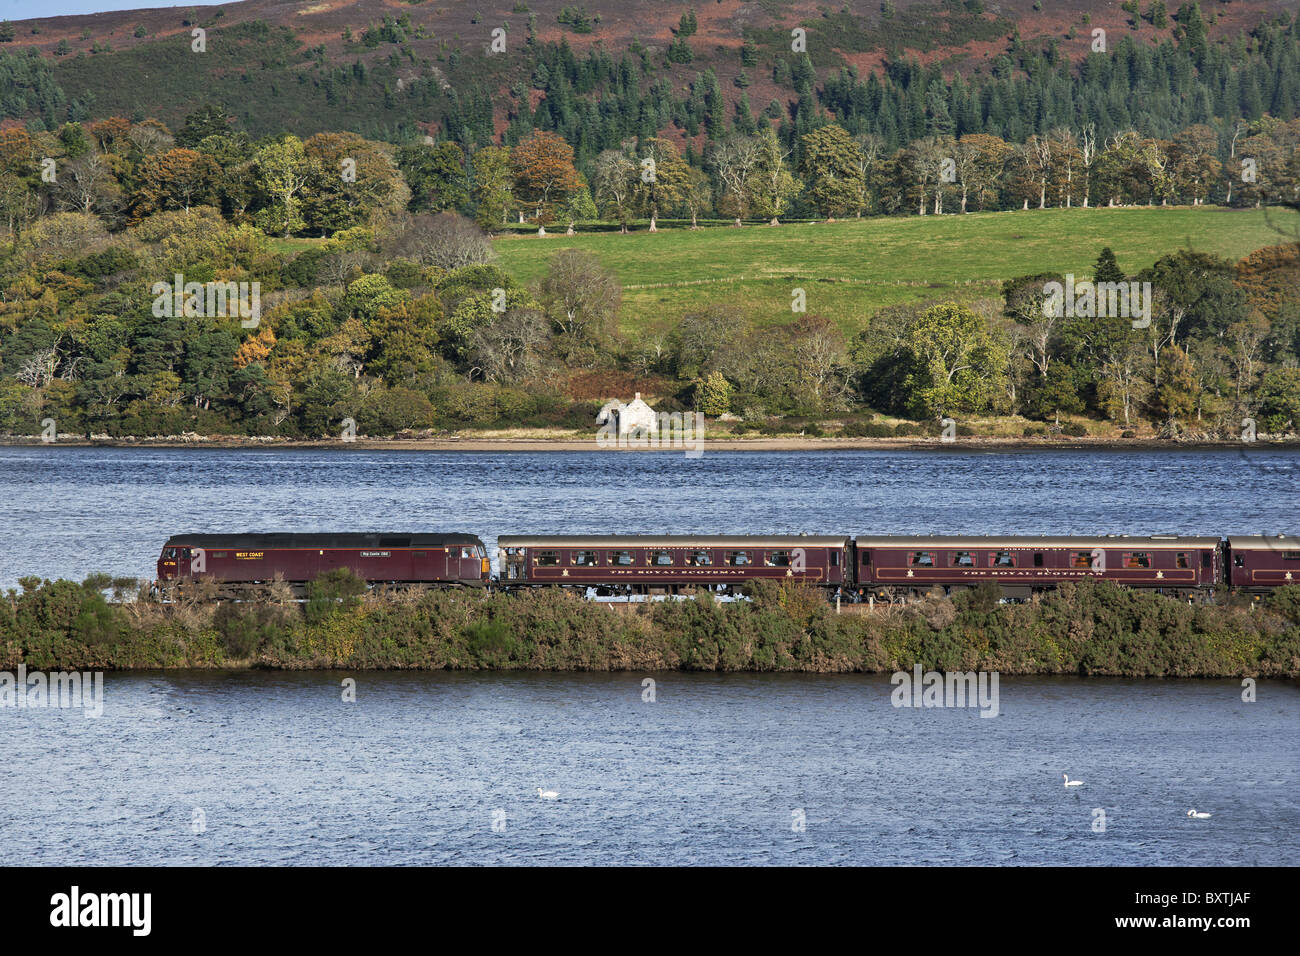 The Royal Scotsman Train. Traveling through Scottish countyside. Stock Photo